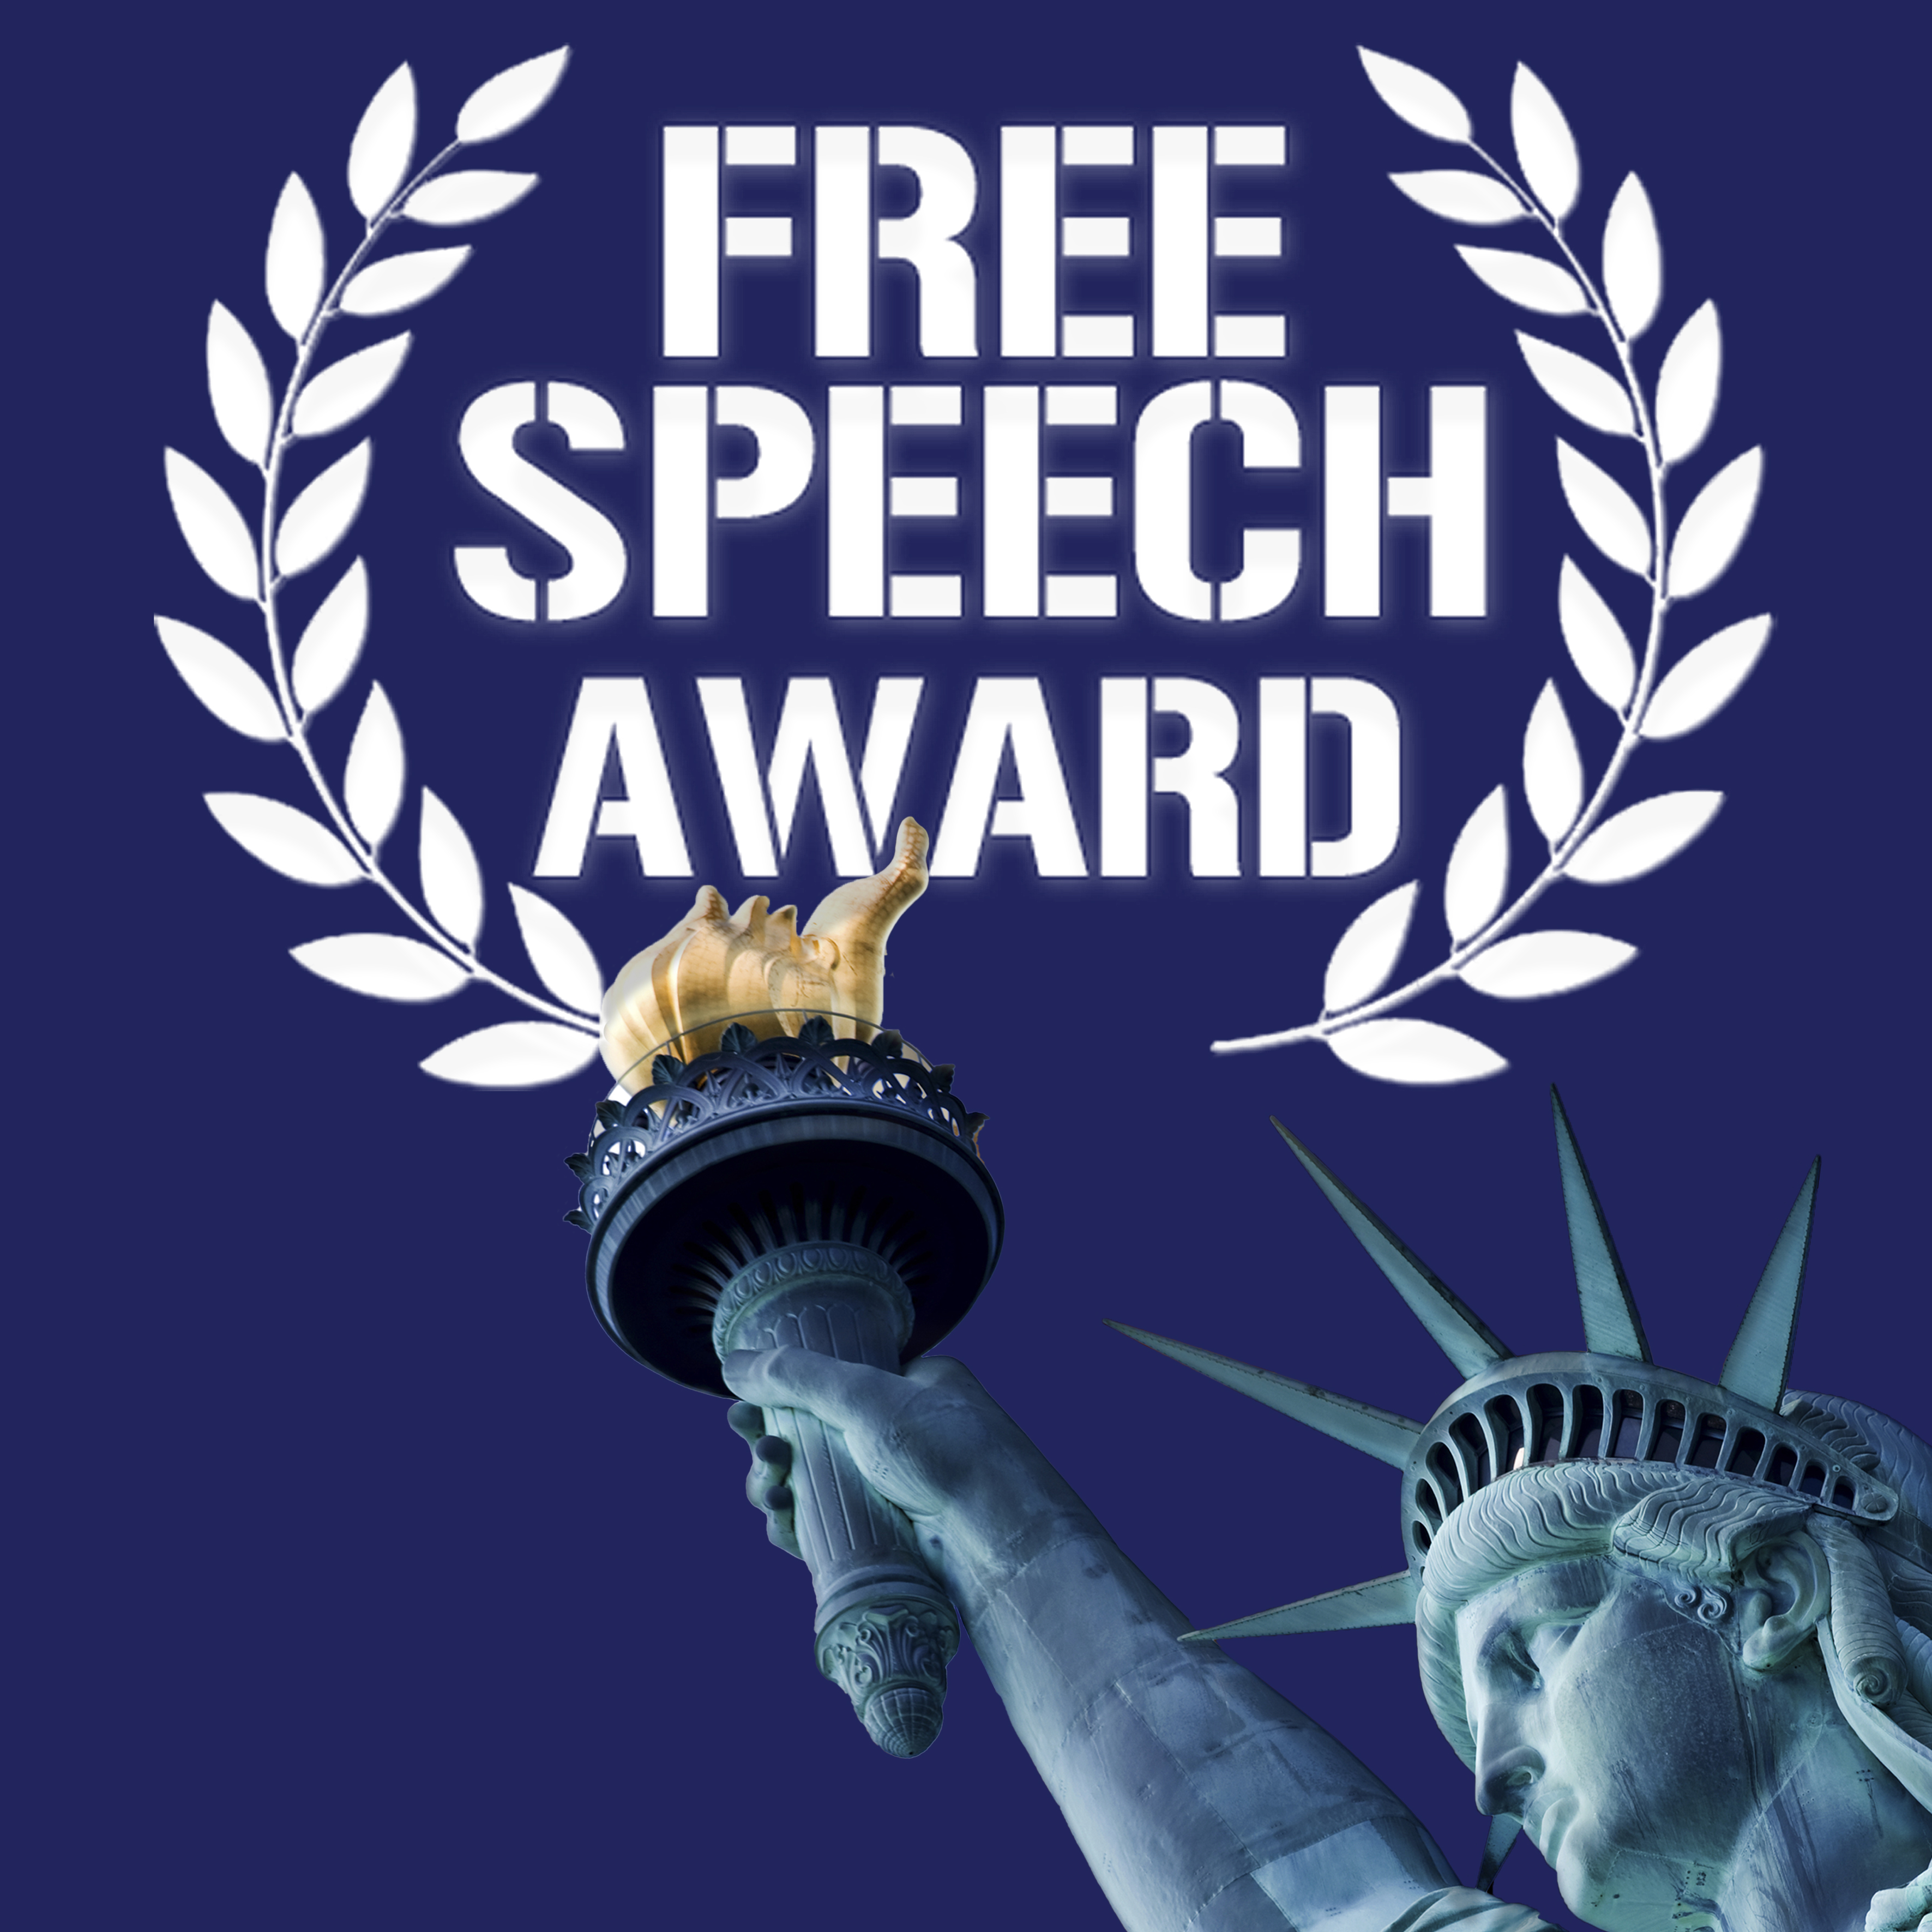 Free Speech Film Festival